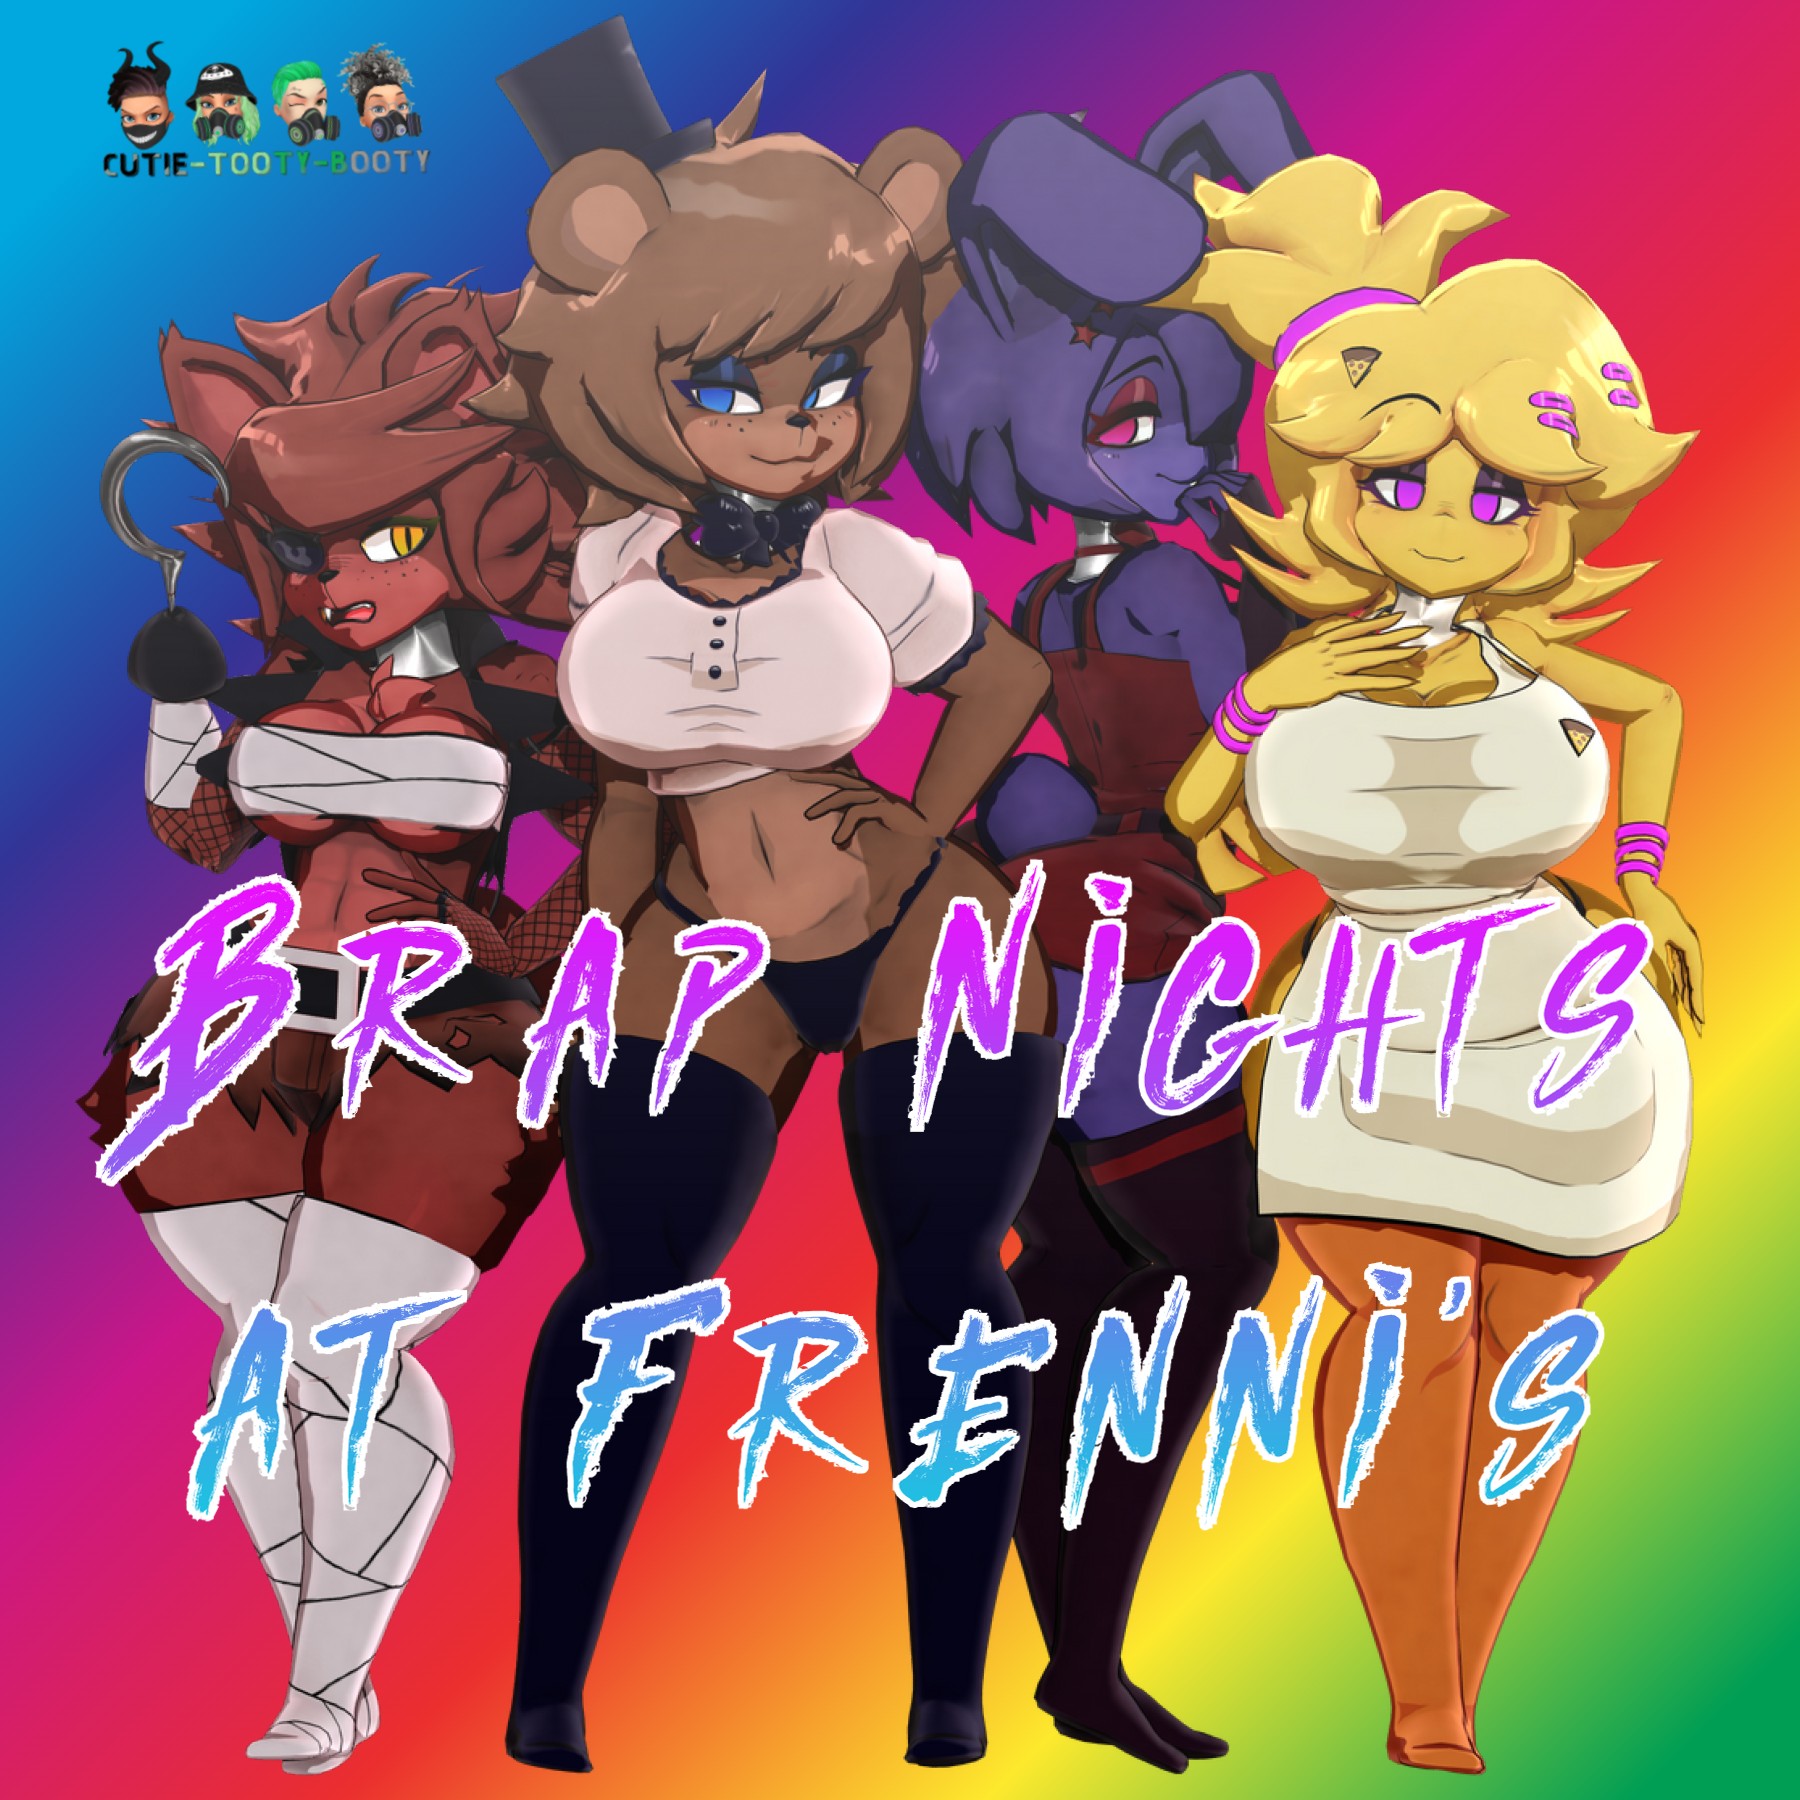 Brap Nights at Frenni's